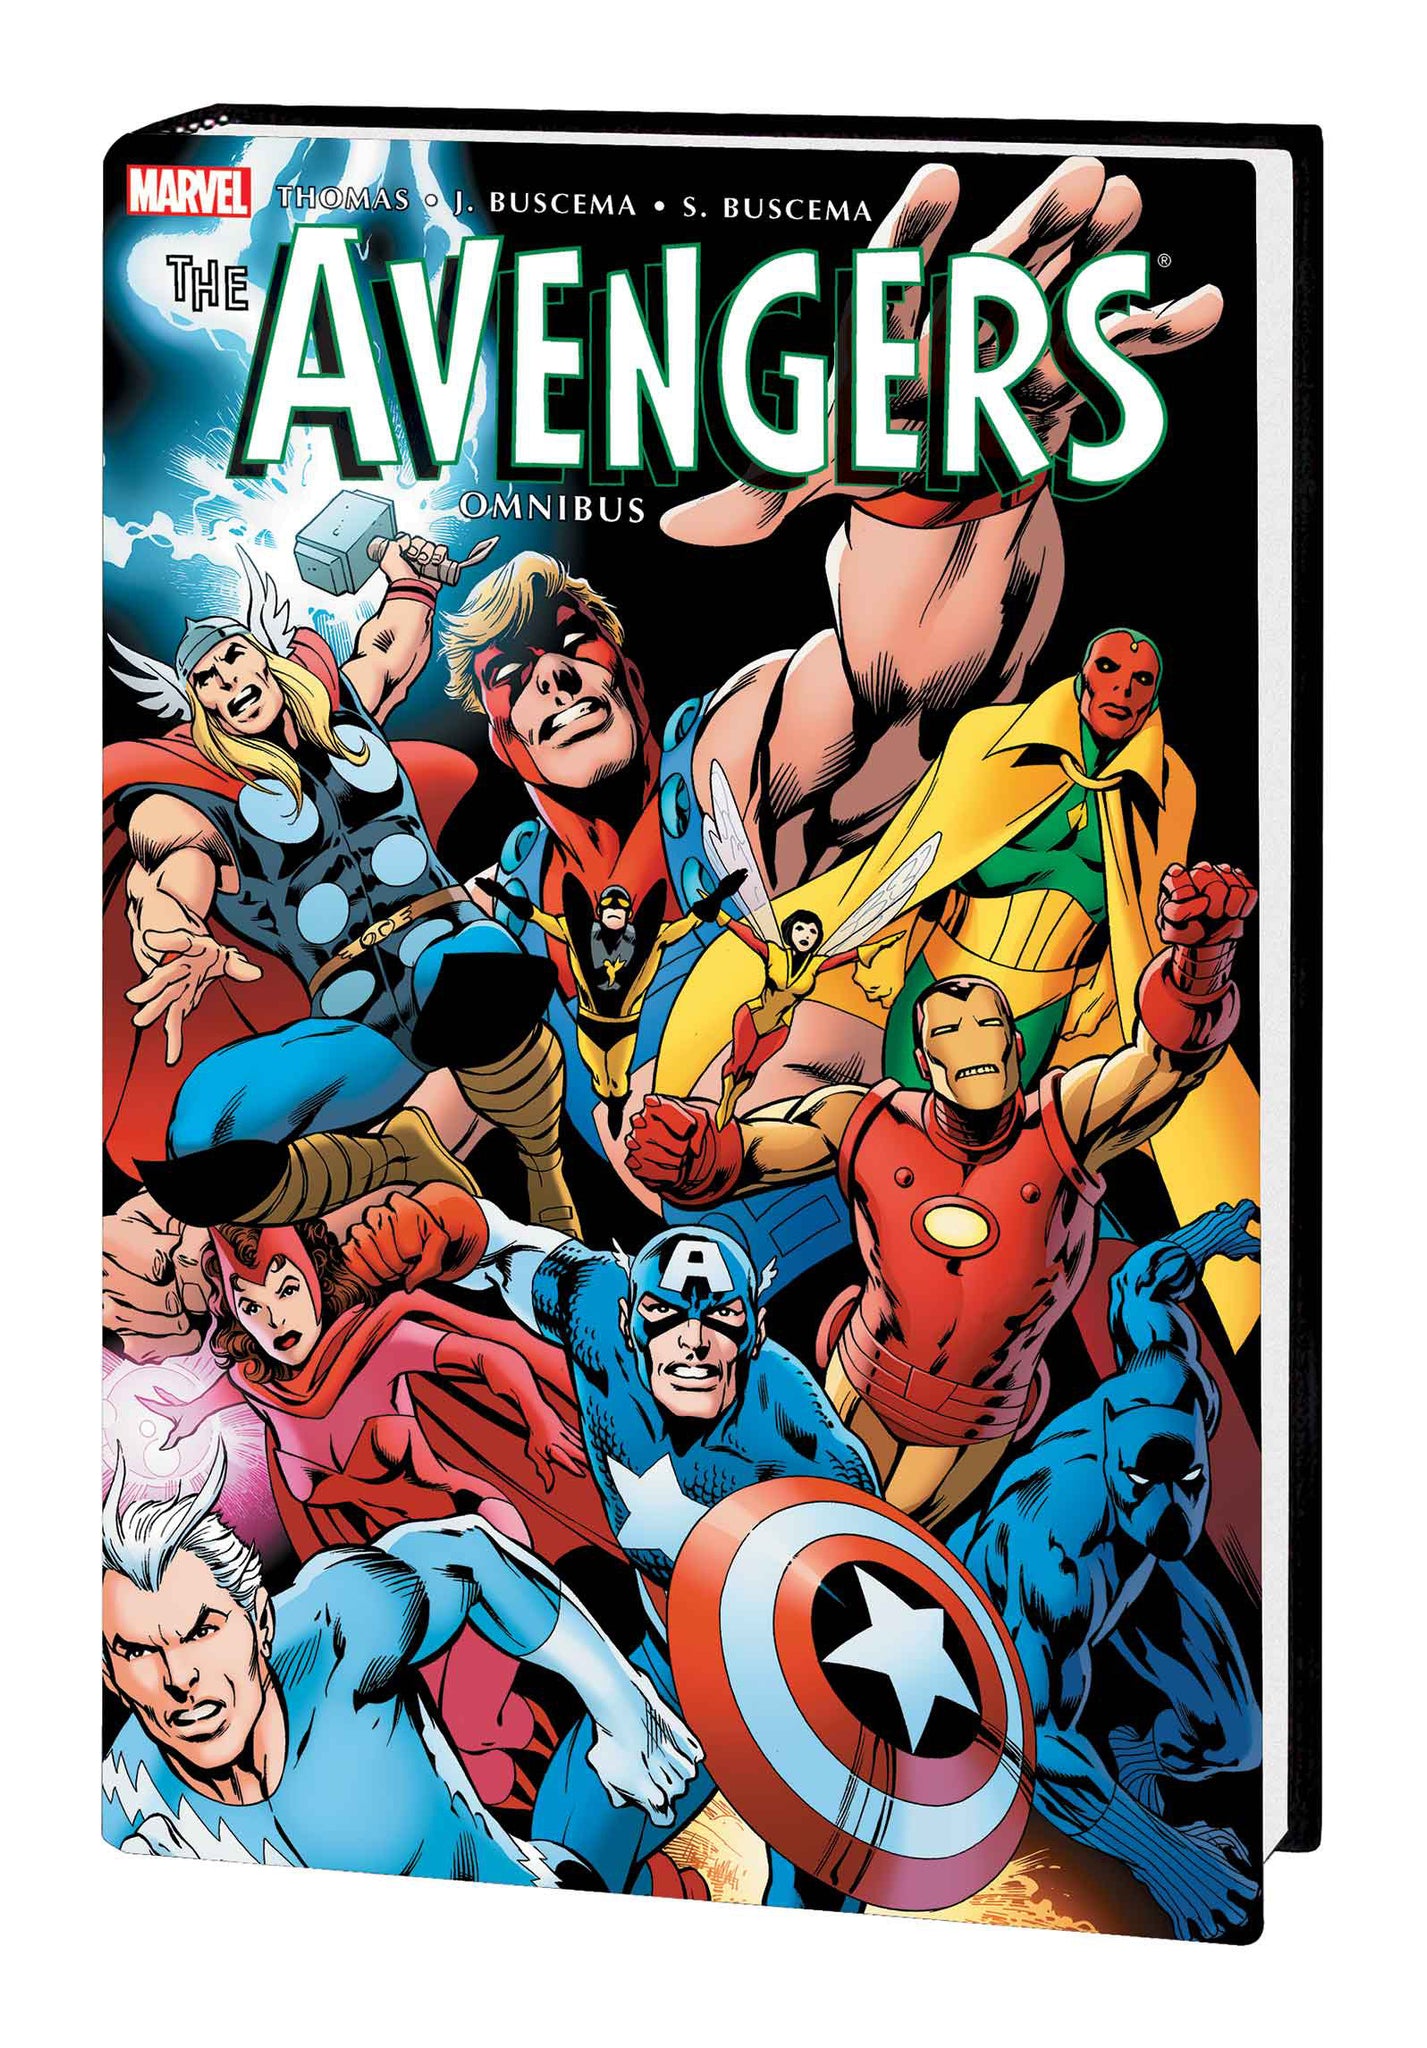 The Avengers Omnibus Volume 3